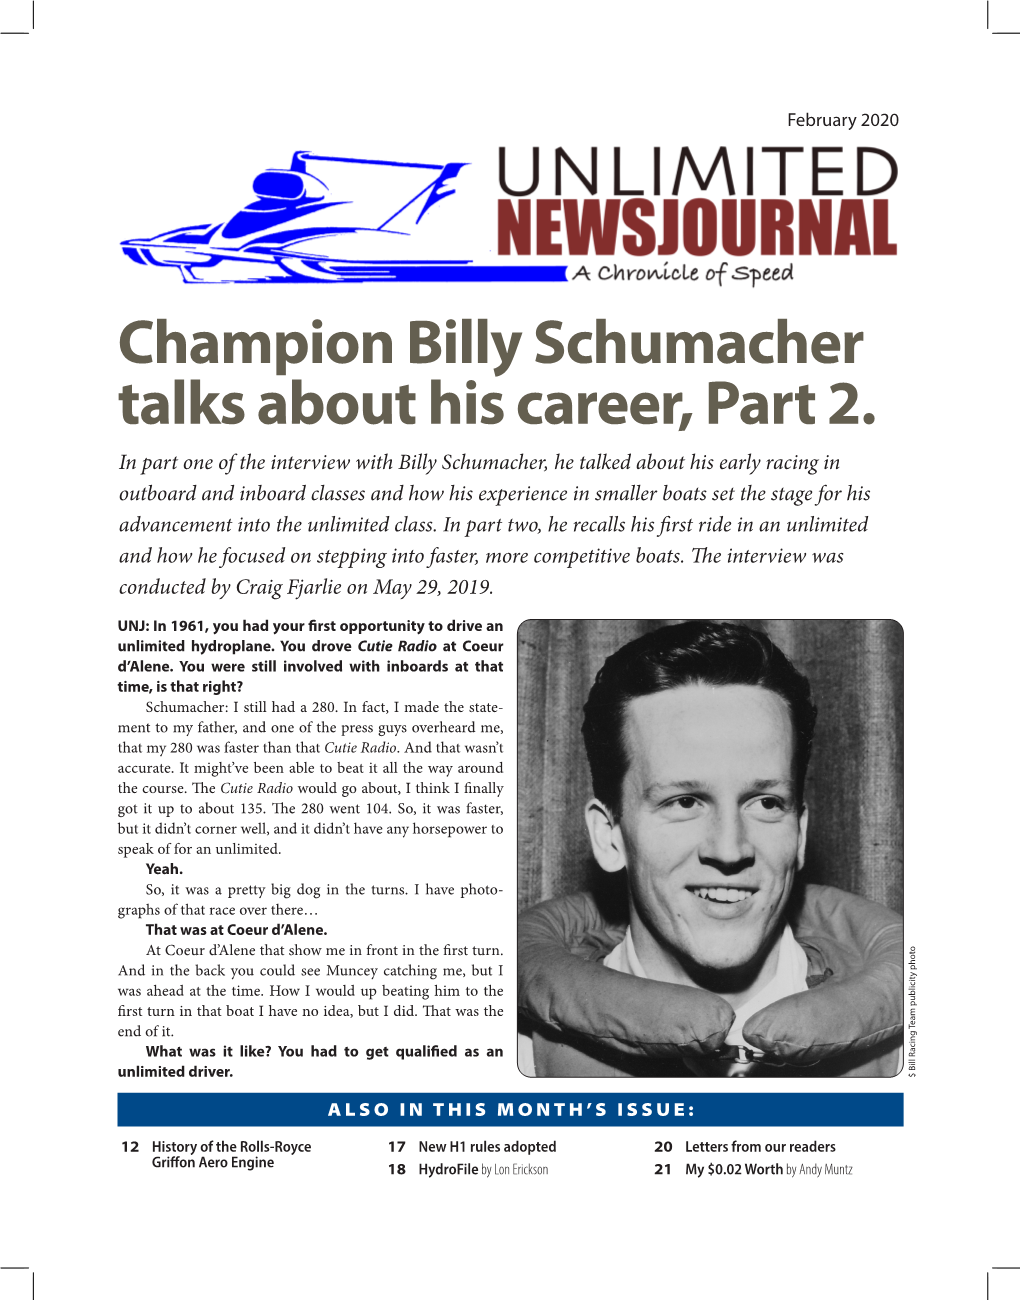 Champion Billy Schumacher Talks About His Career, Part 2